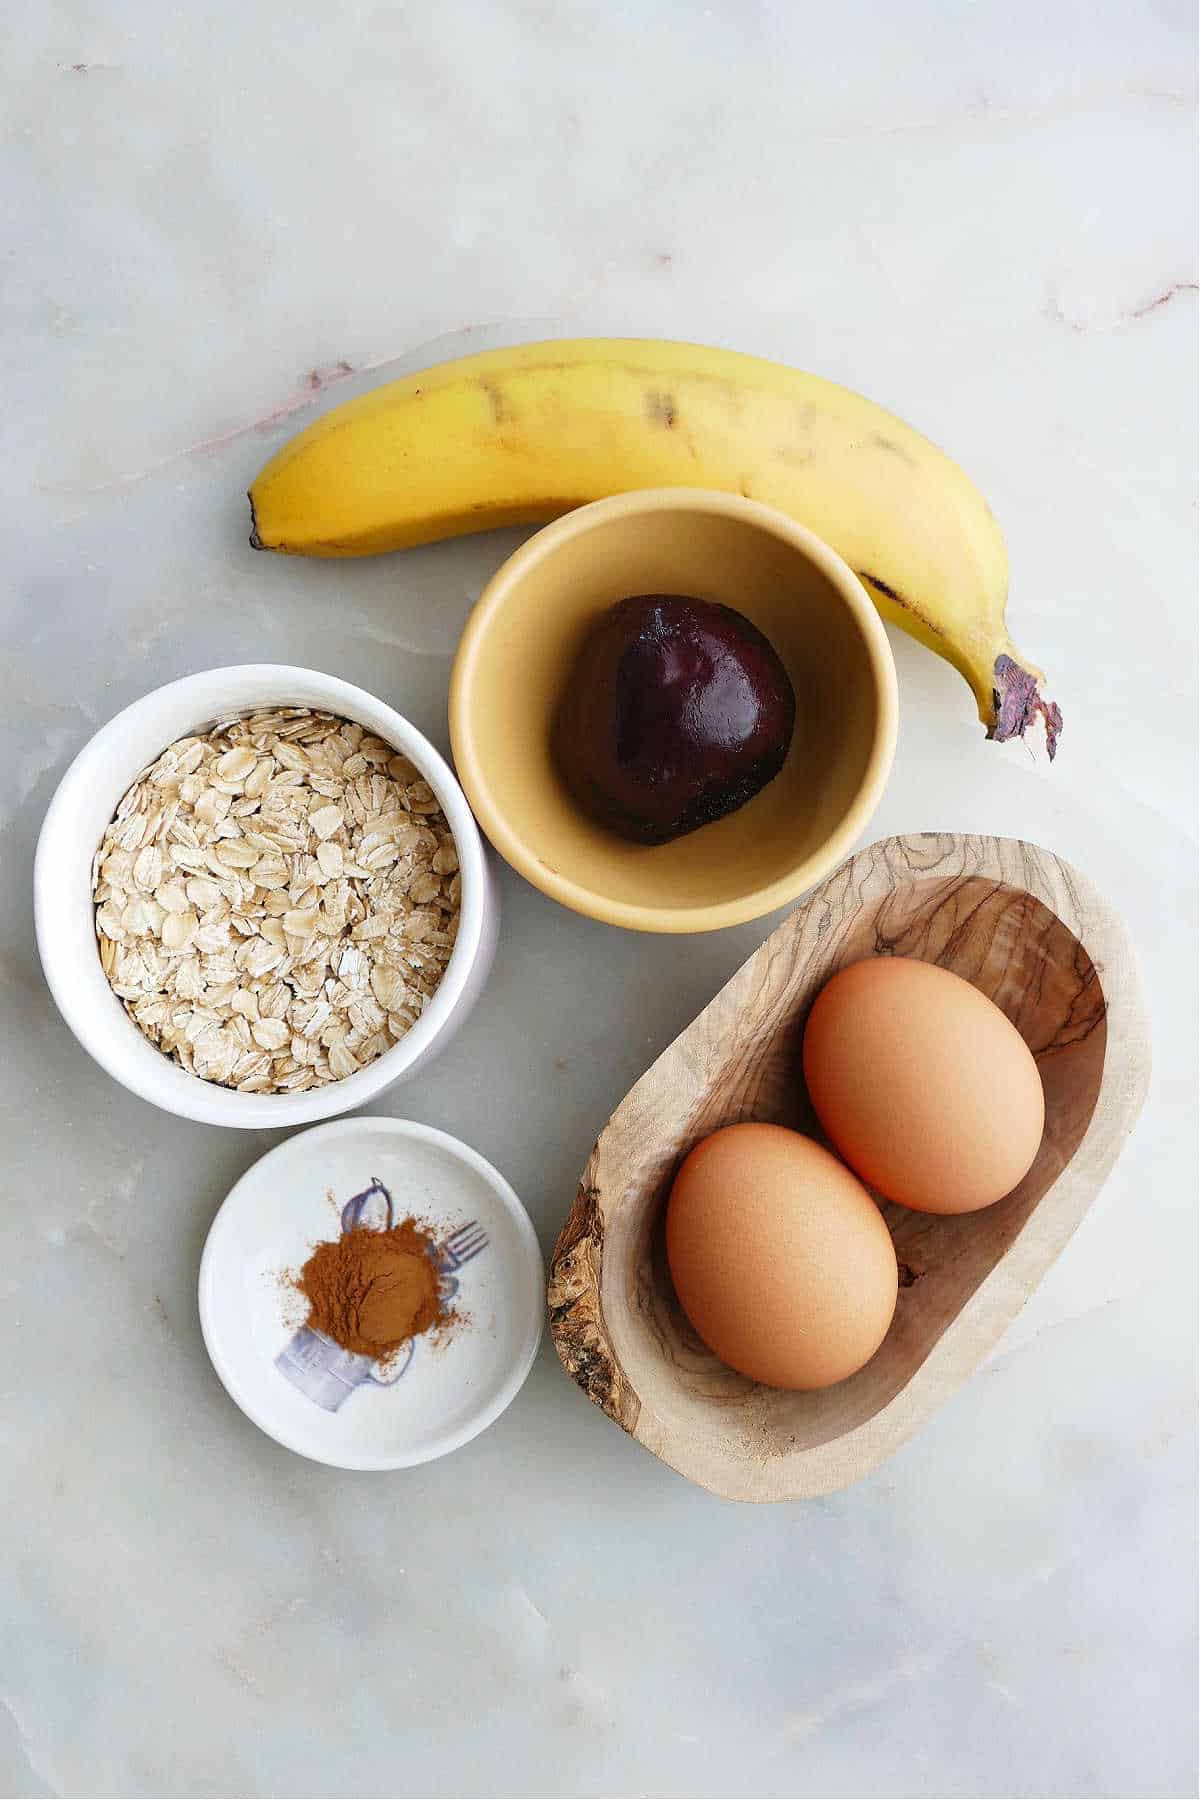 banana, roasted beets, oats, cinnamon, and eggs on a counter